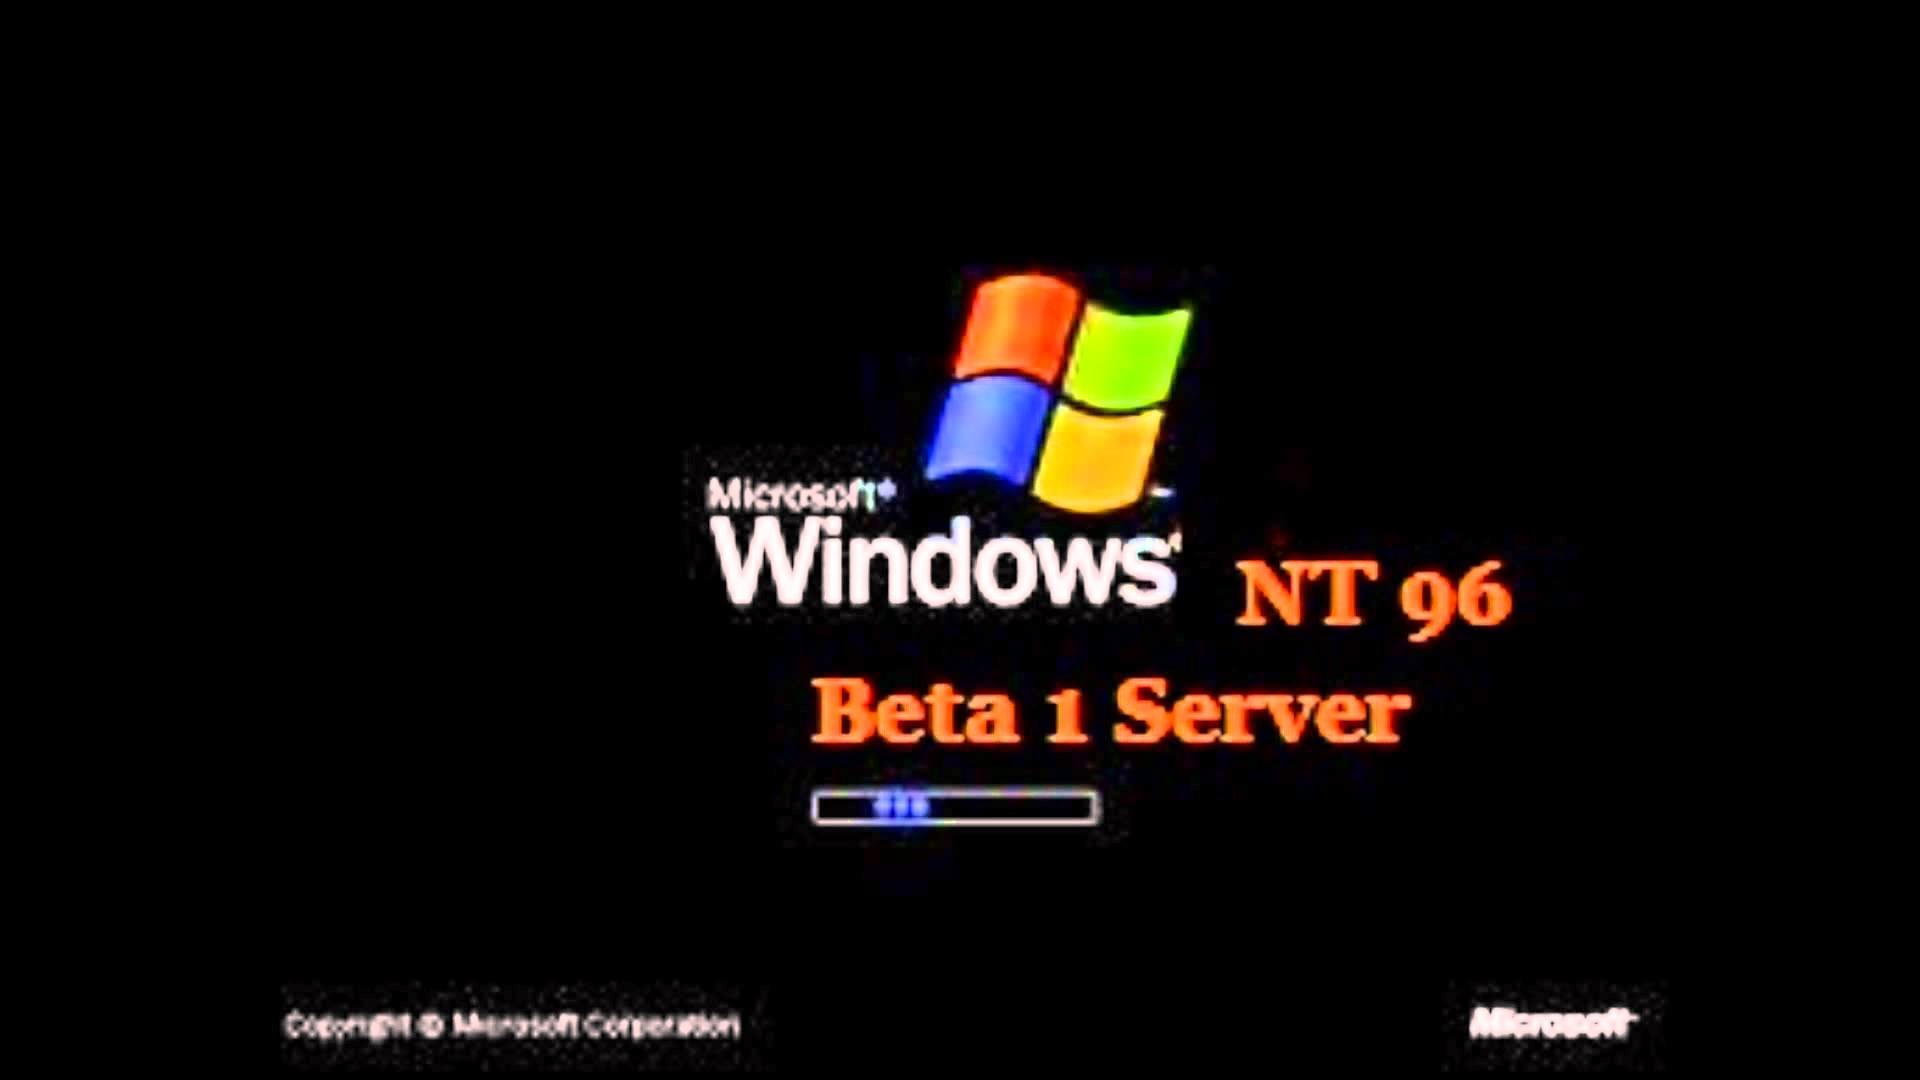 1920x1080 Windows Never Released 1: Special Episode: Windows NT 96 Betas